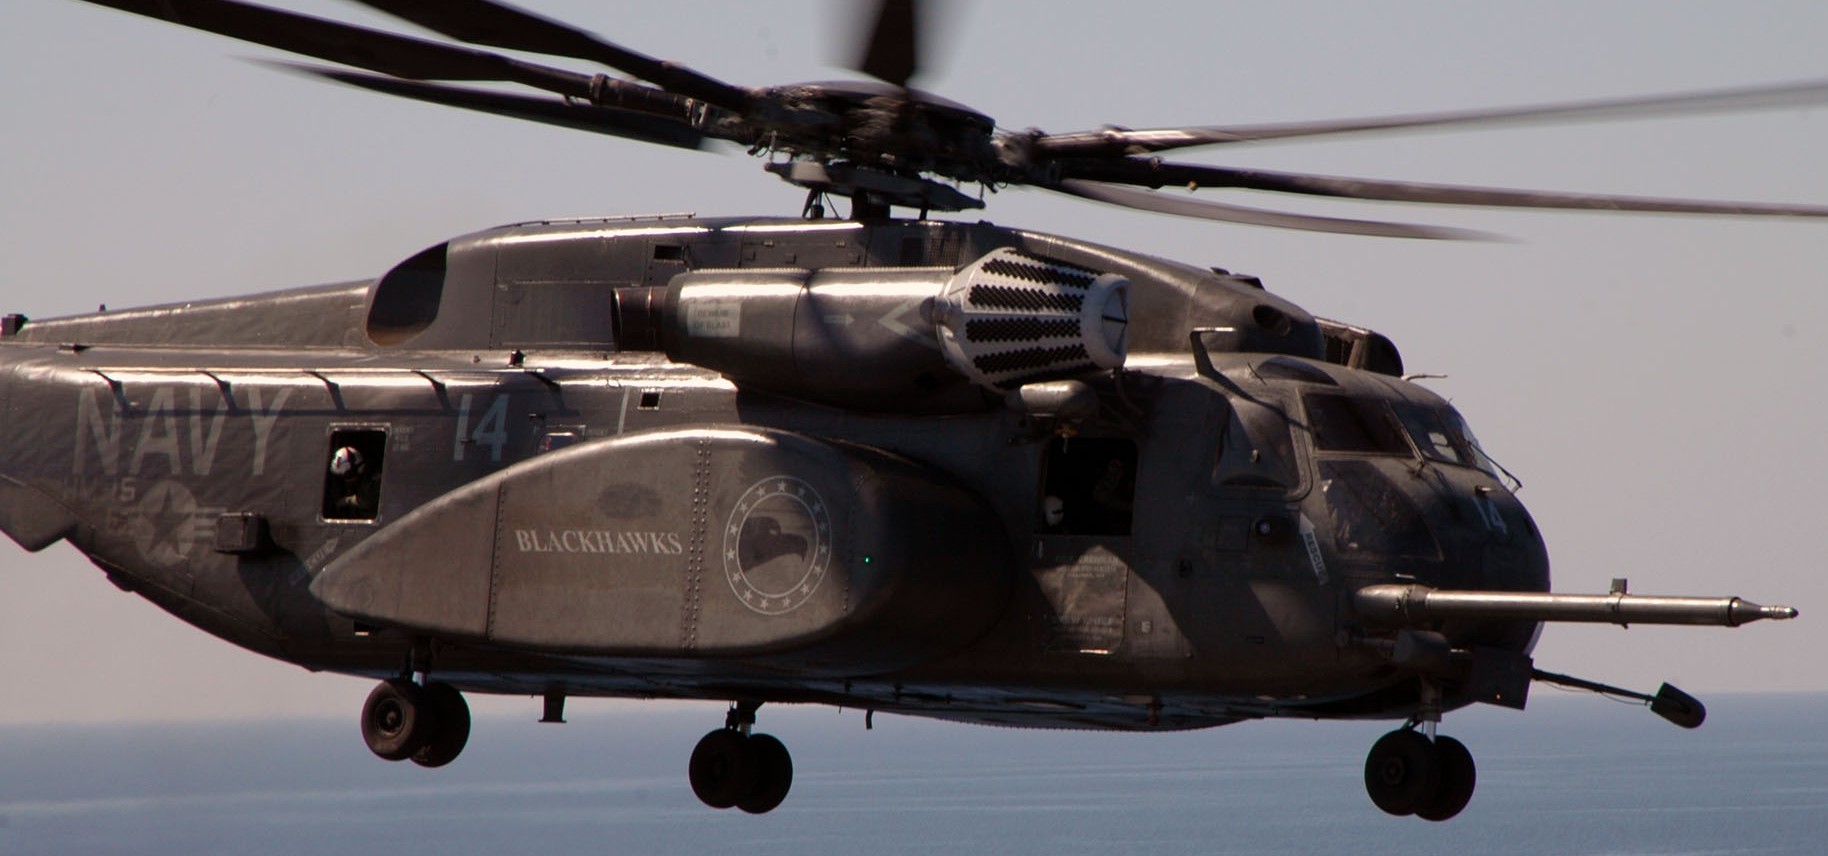 hm-15 blackhawks helicopter mine countermeasures squadron navy mh-53e sea dragon 56